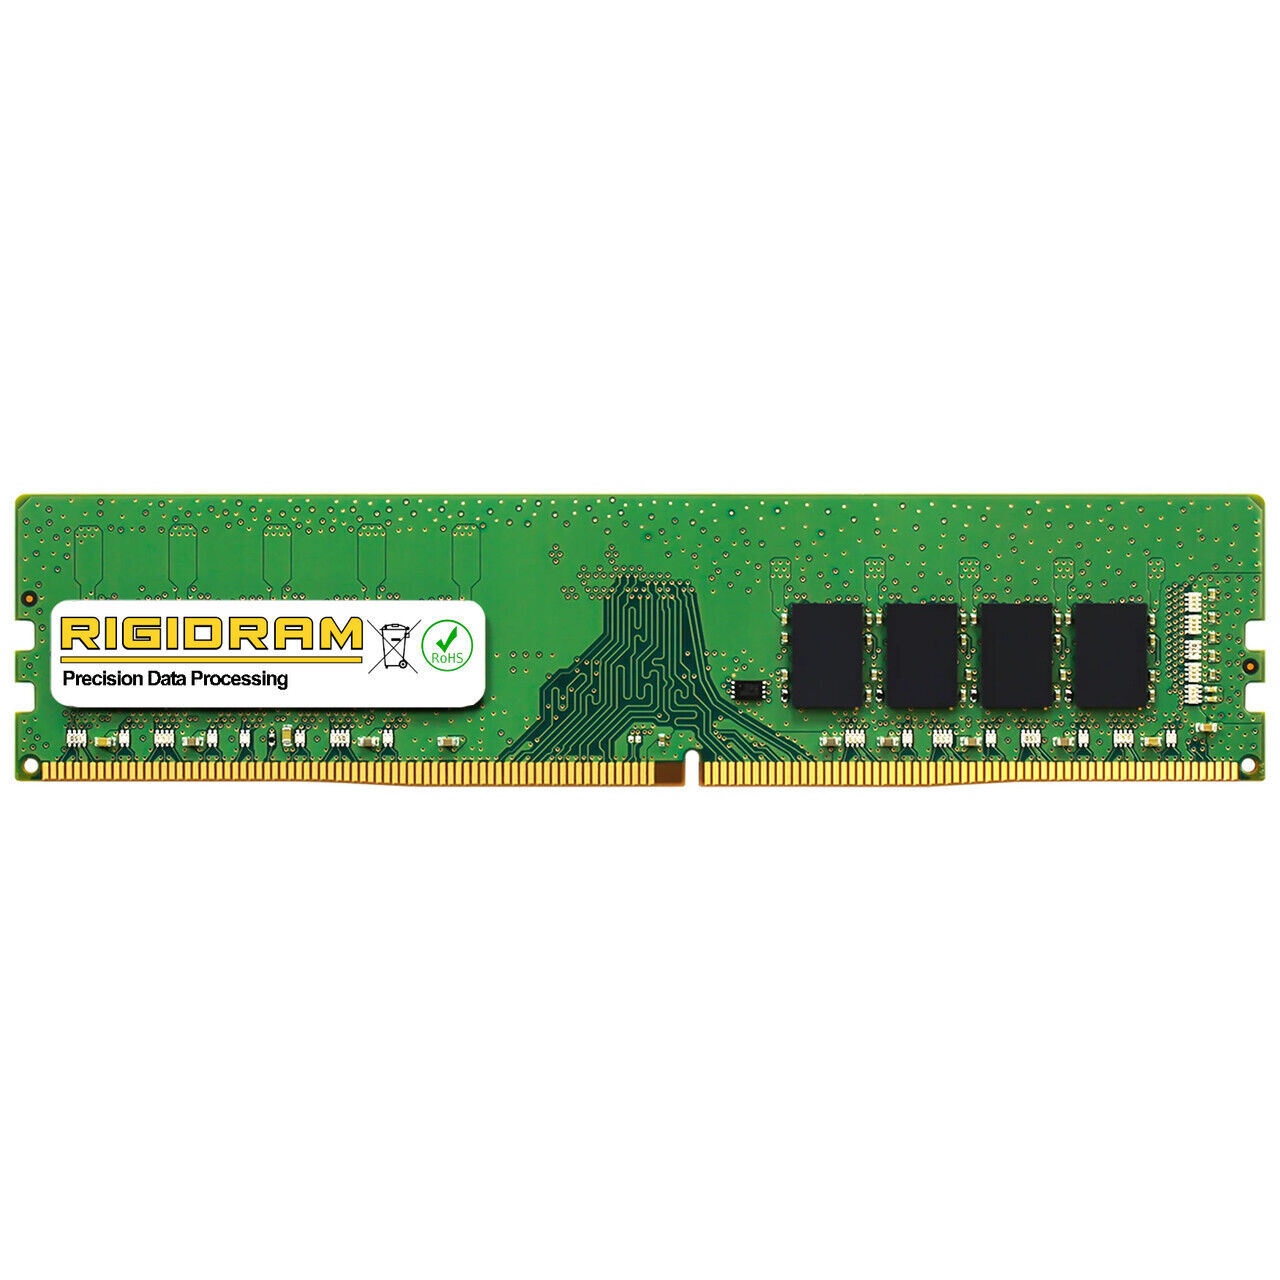 8GB 854913-001 DDR4-2400MHz RigidRAM UDIMM Memory for HP